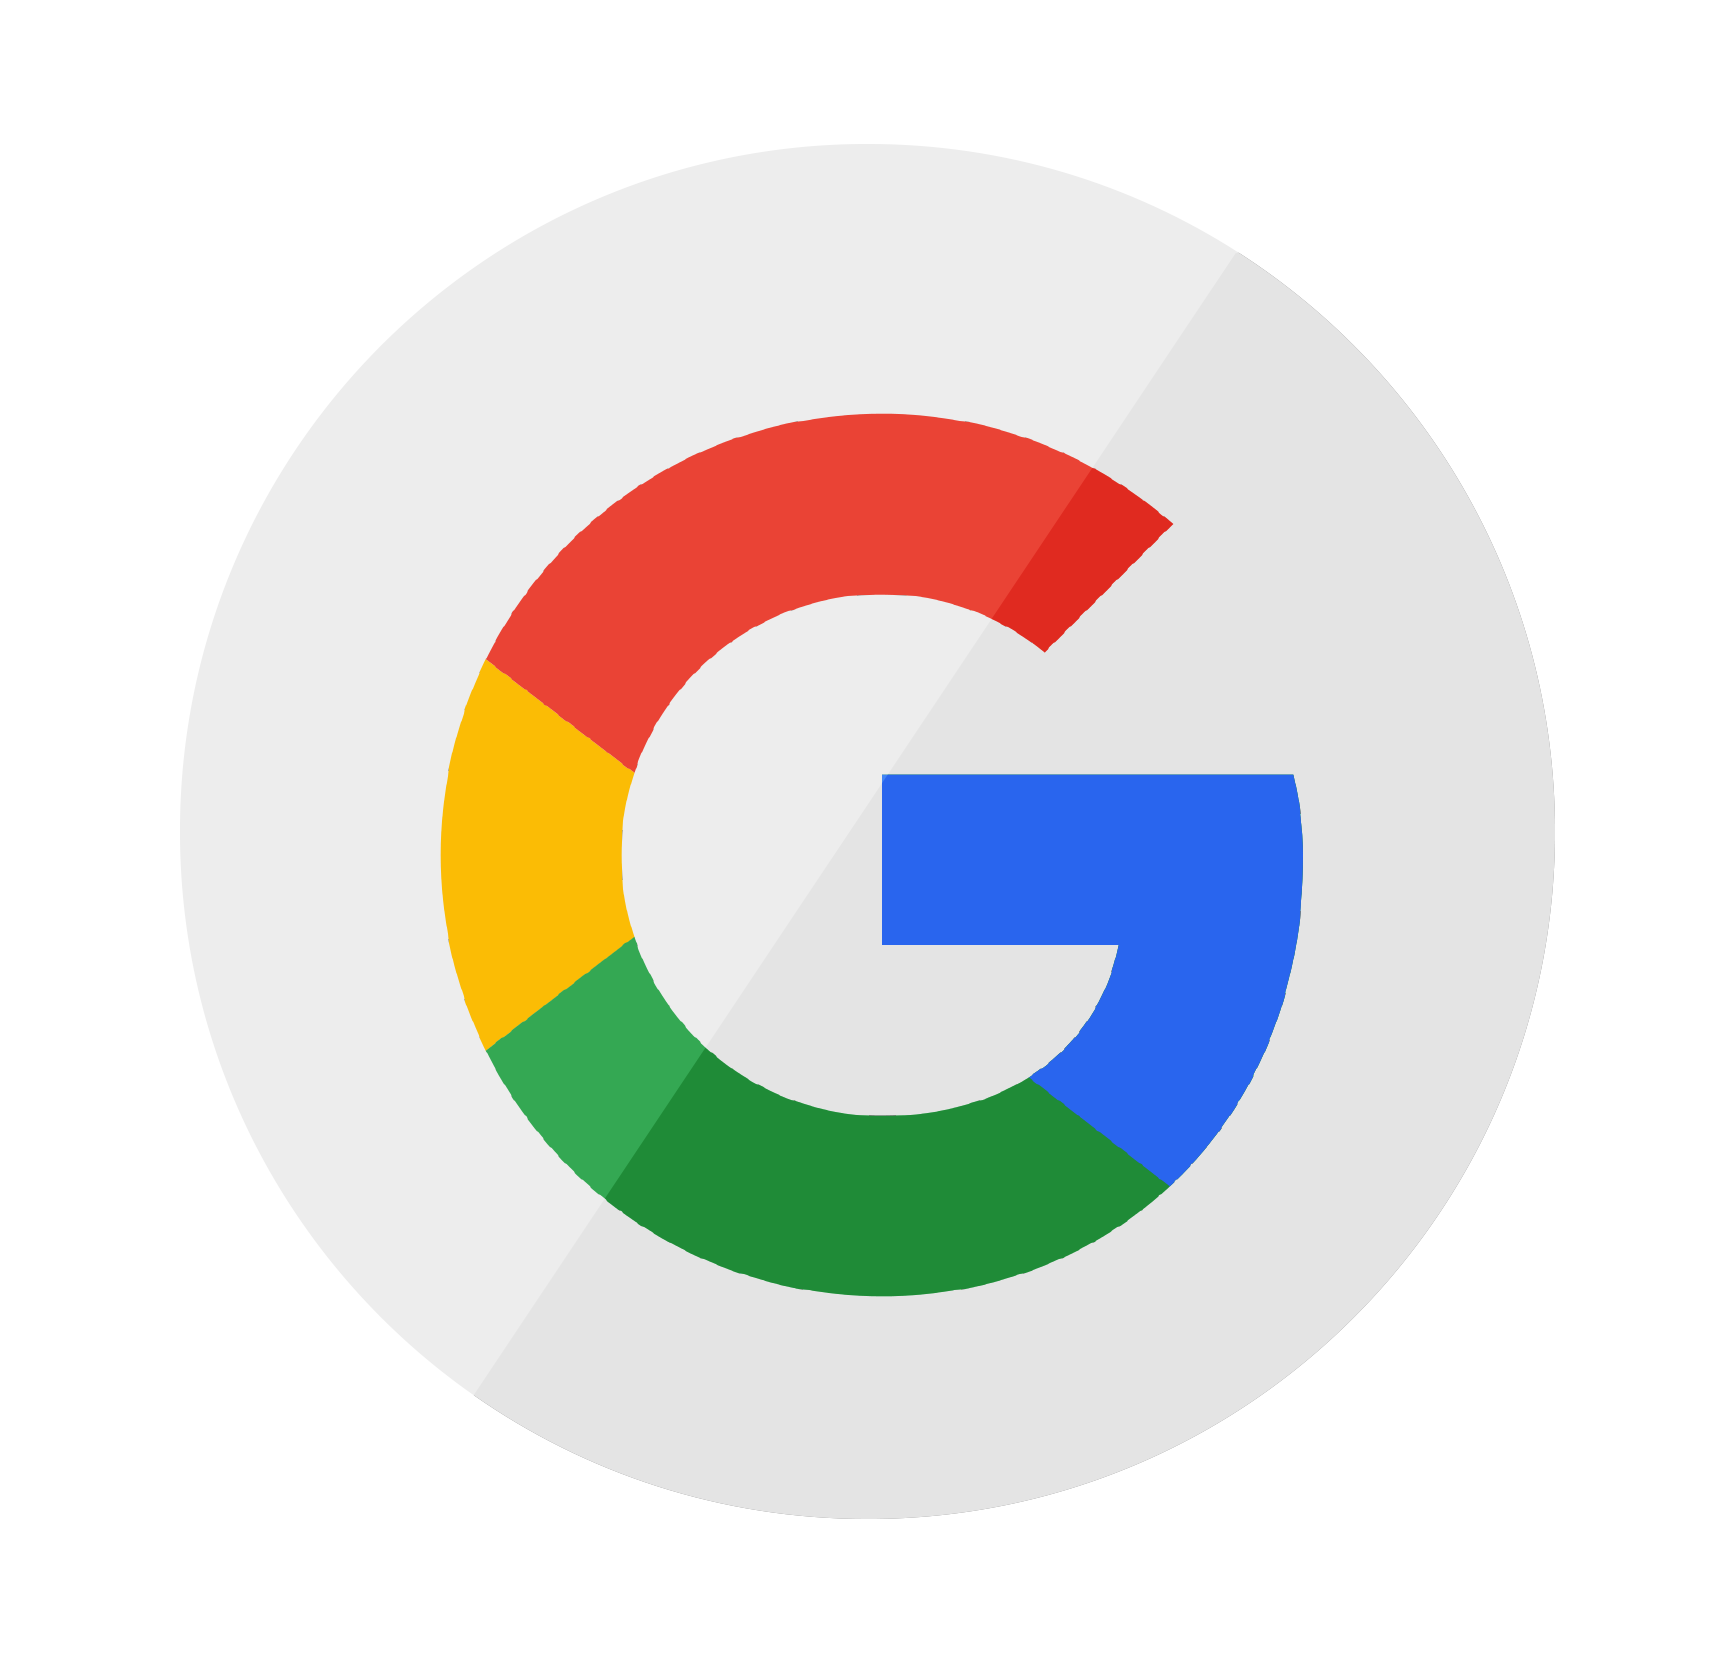 Download Google Pay Gboard Platform Logo Cloud HQ PNG Image | FreePNGImg